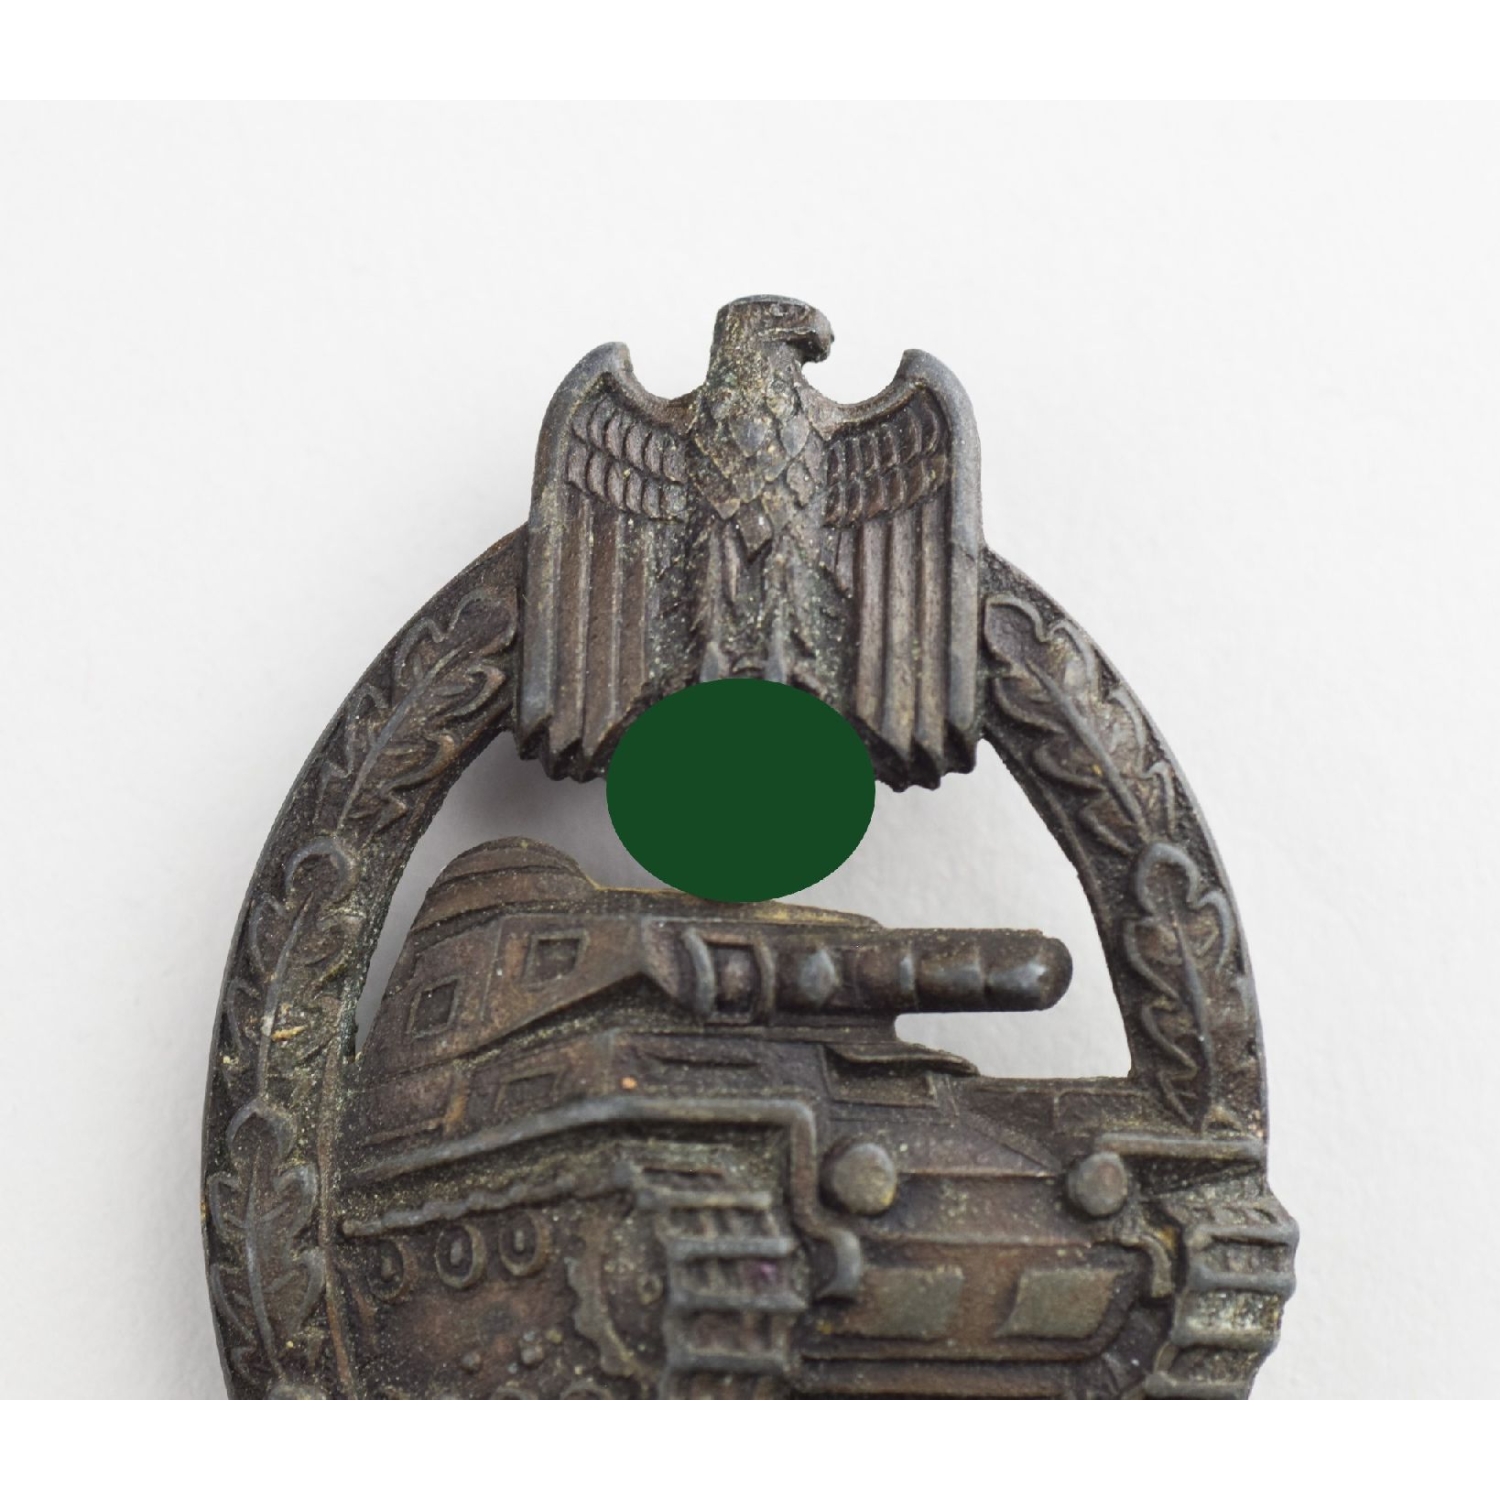 Panzerkampfabzeichen in Bronze hohle Ausführung C.E Juncker, Berlin